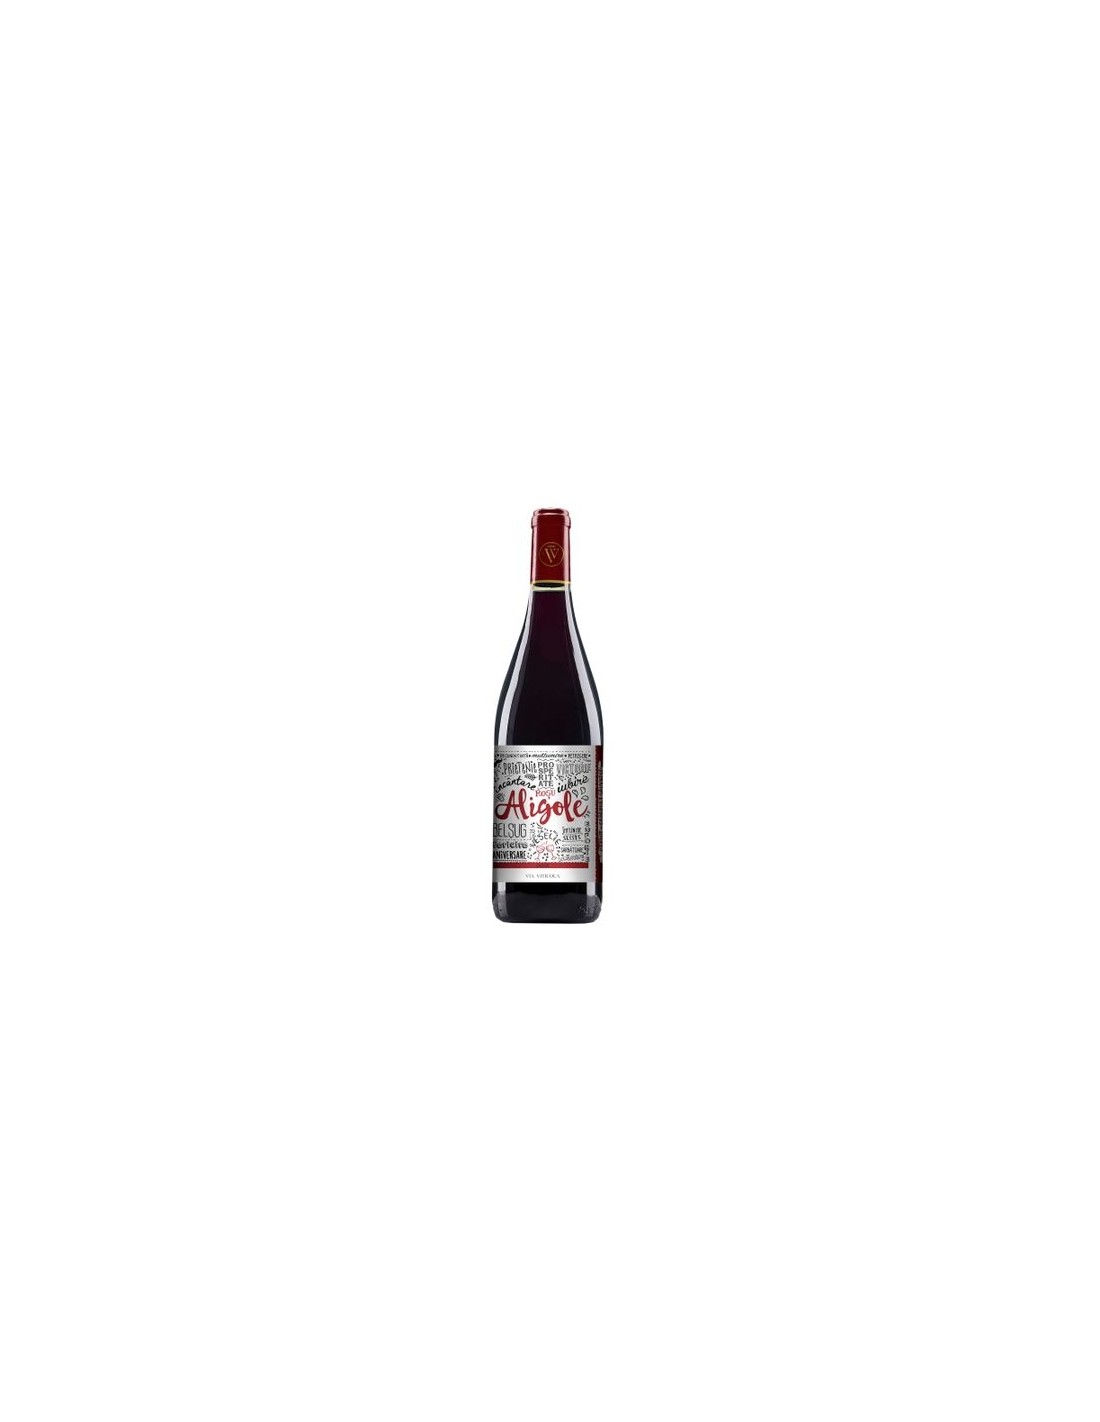 Vin rosu demidulce, Cupaj, Aligole Dealurile Dobrogei, 0.75L, 13% alc., Romania